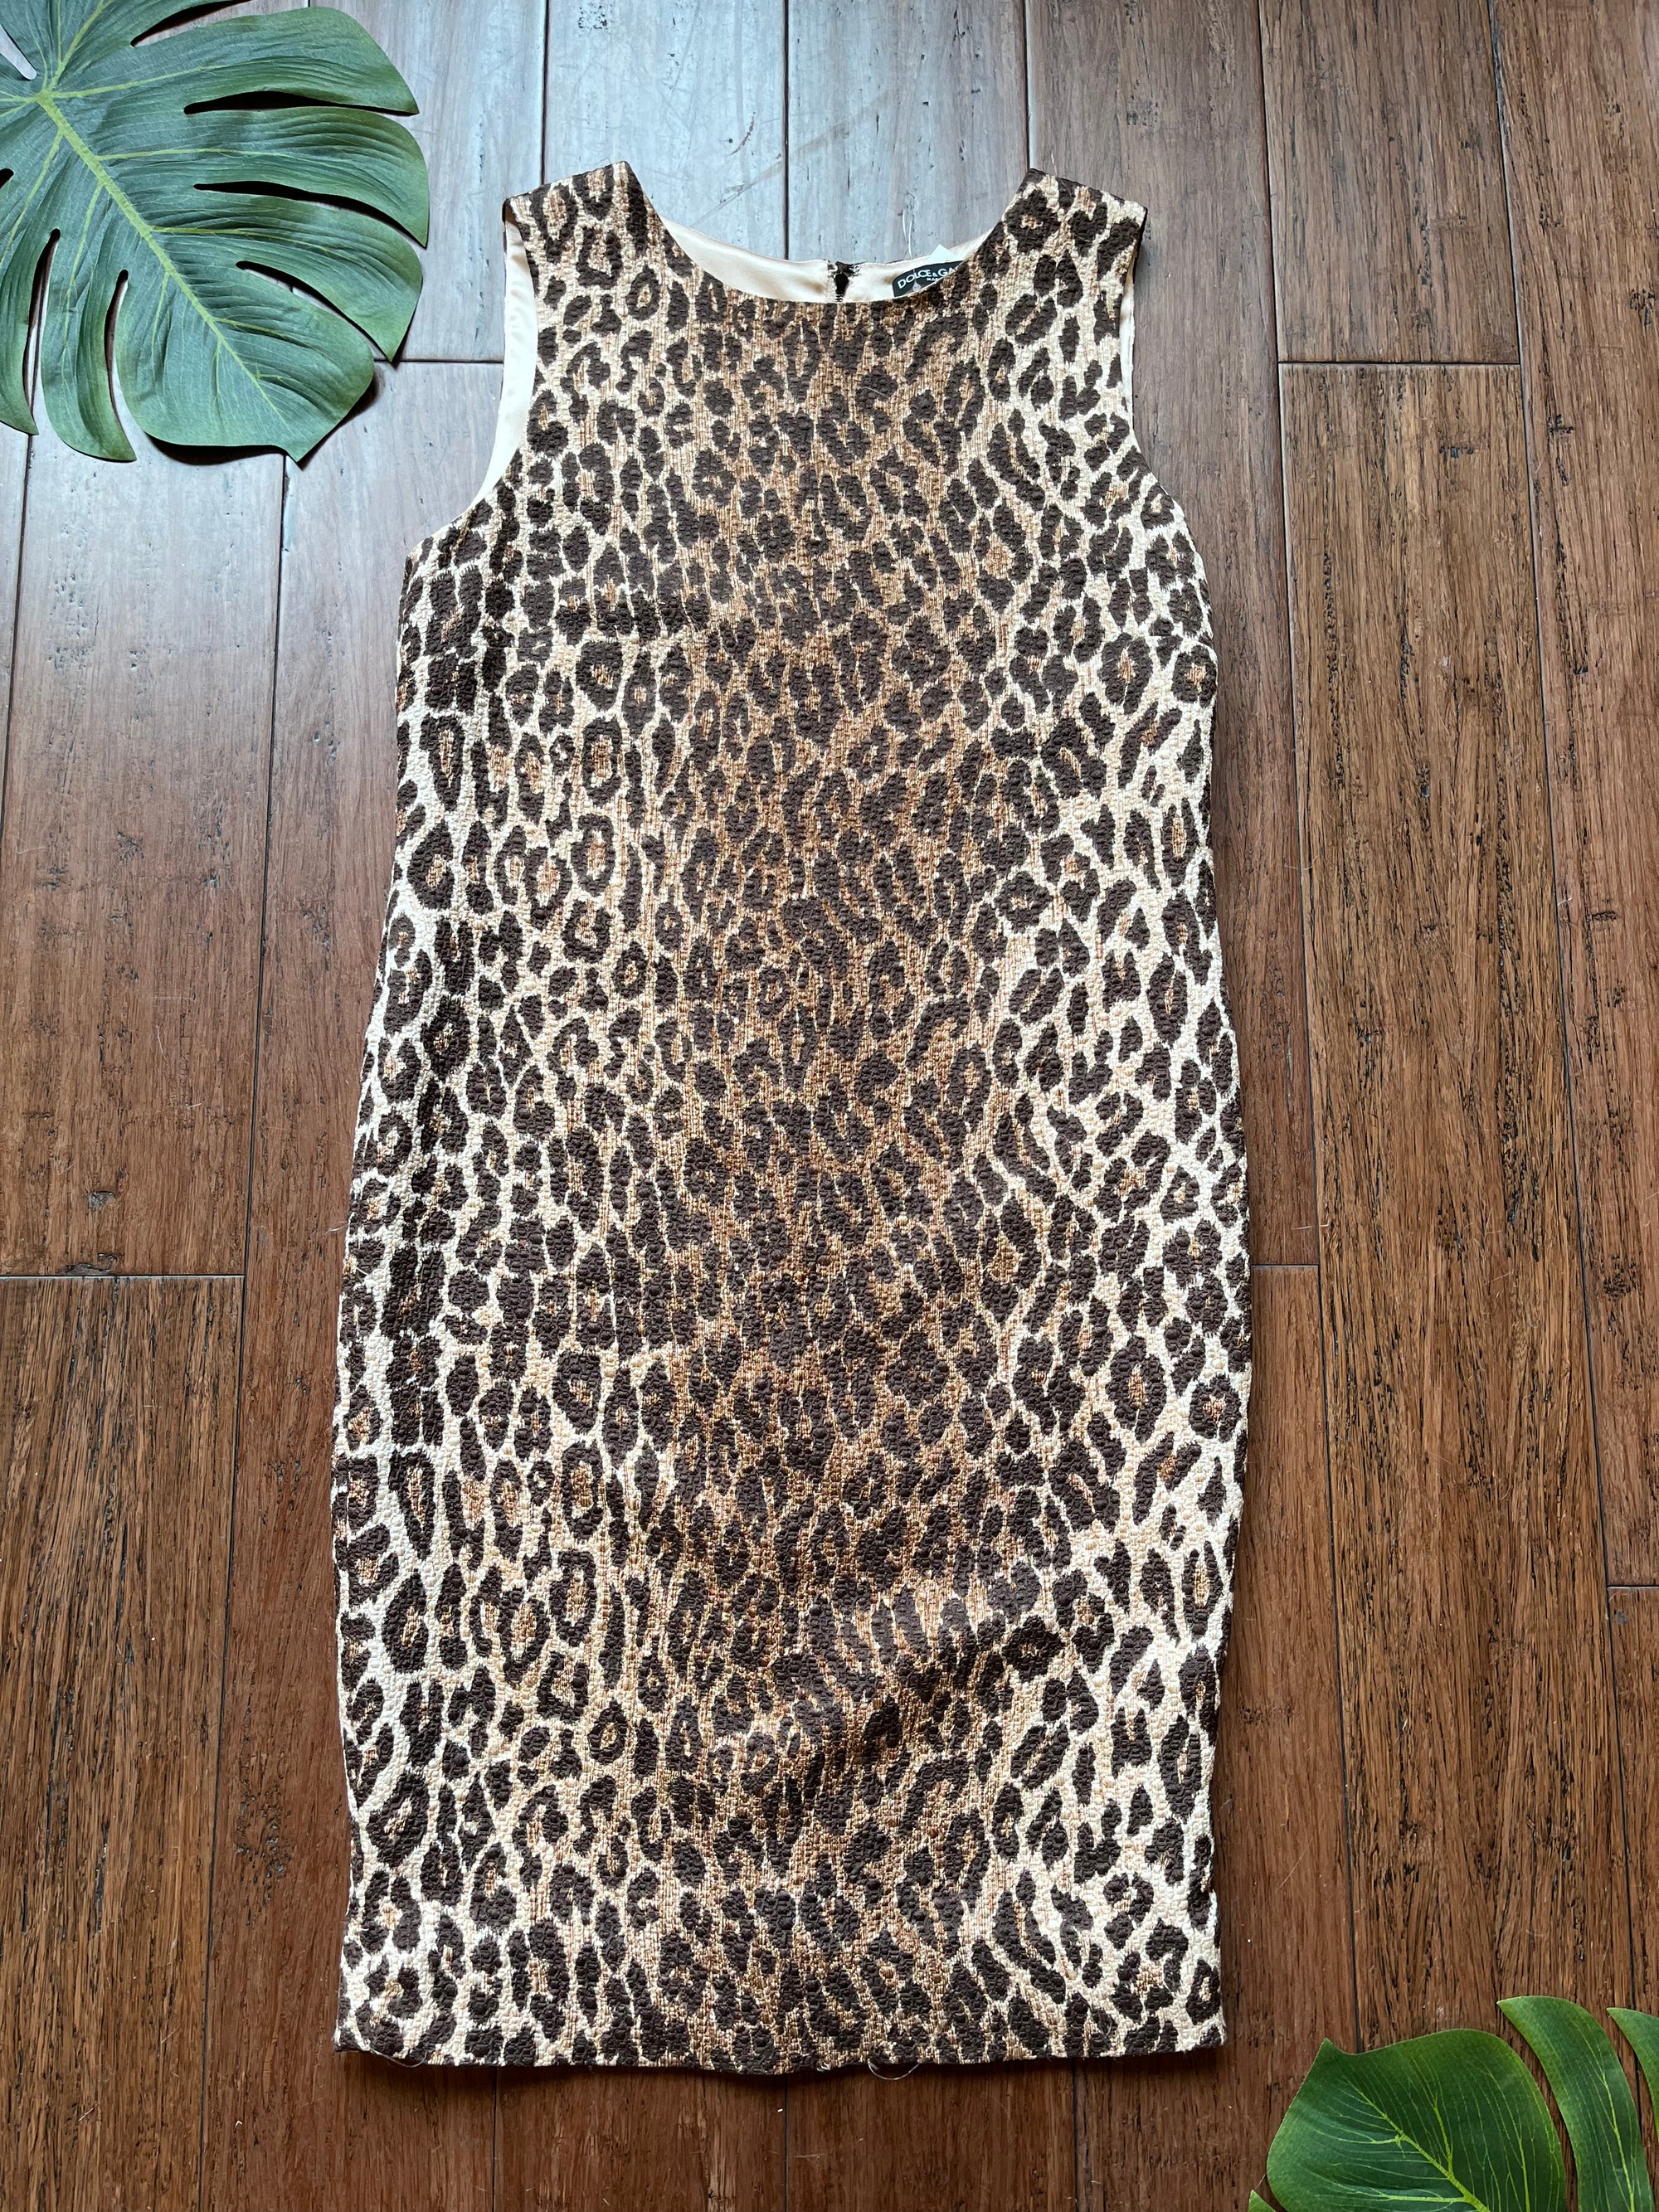 DOLCE&GABBANA Leopard Print Shift Dress